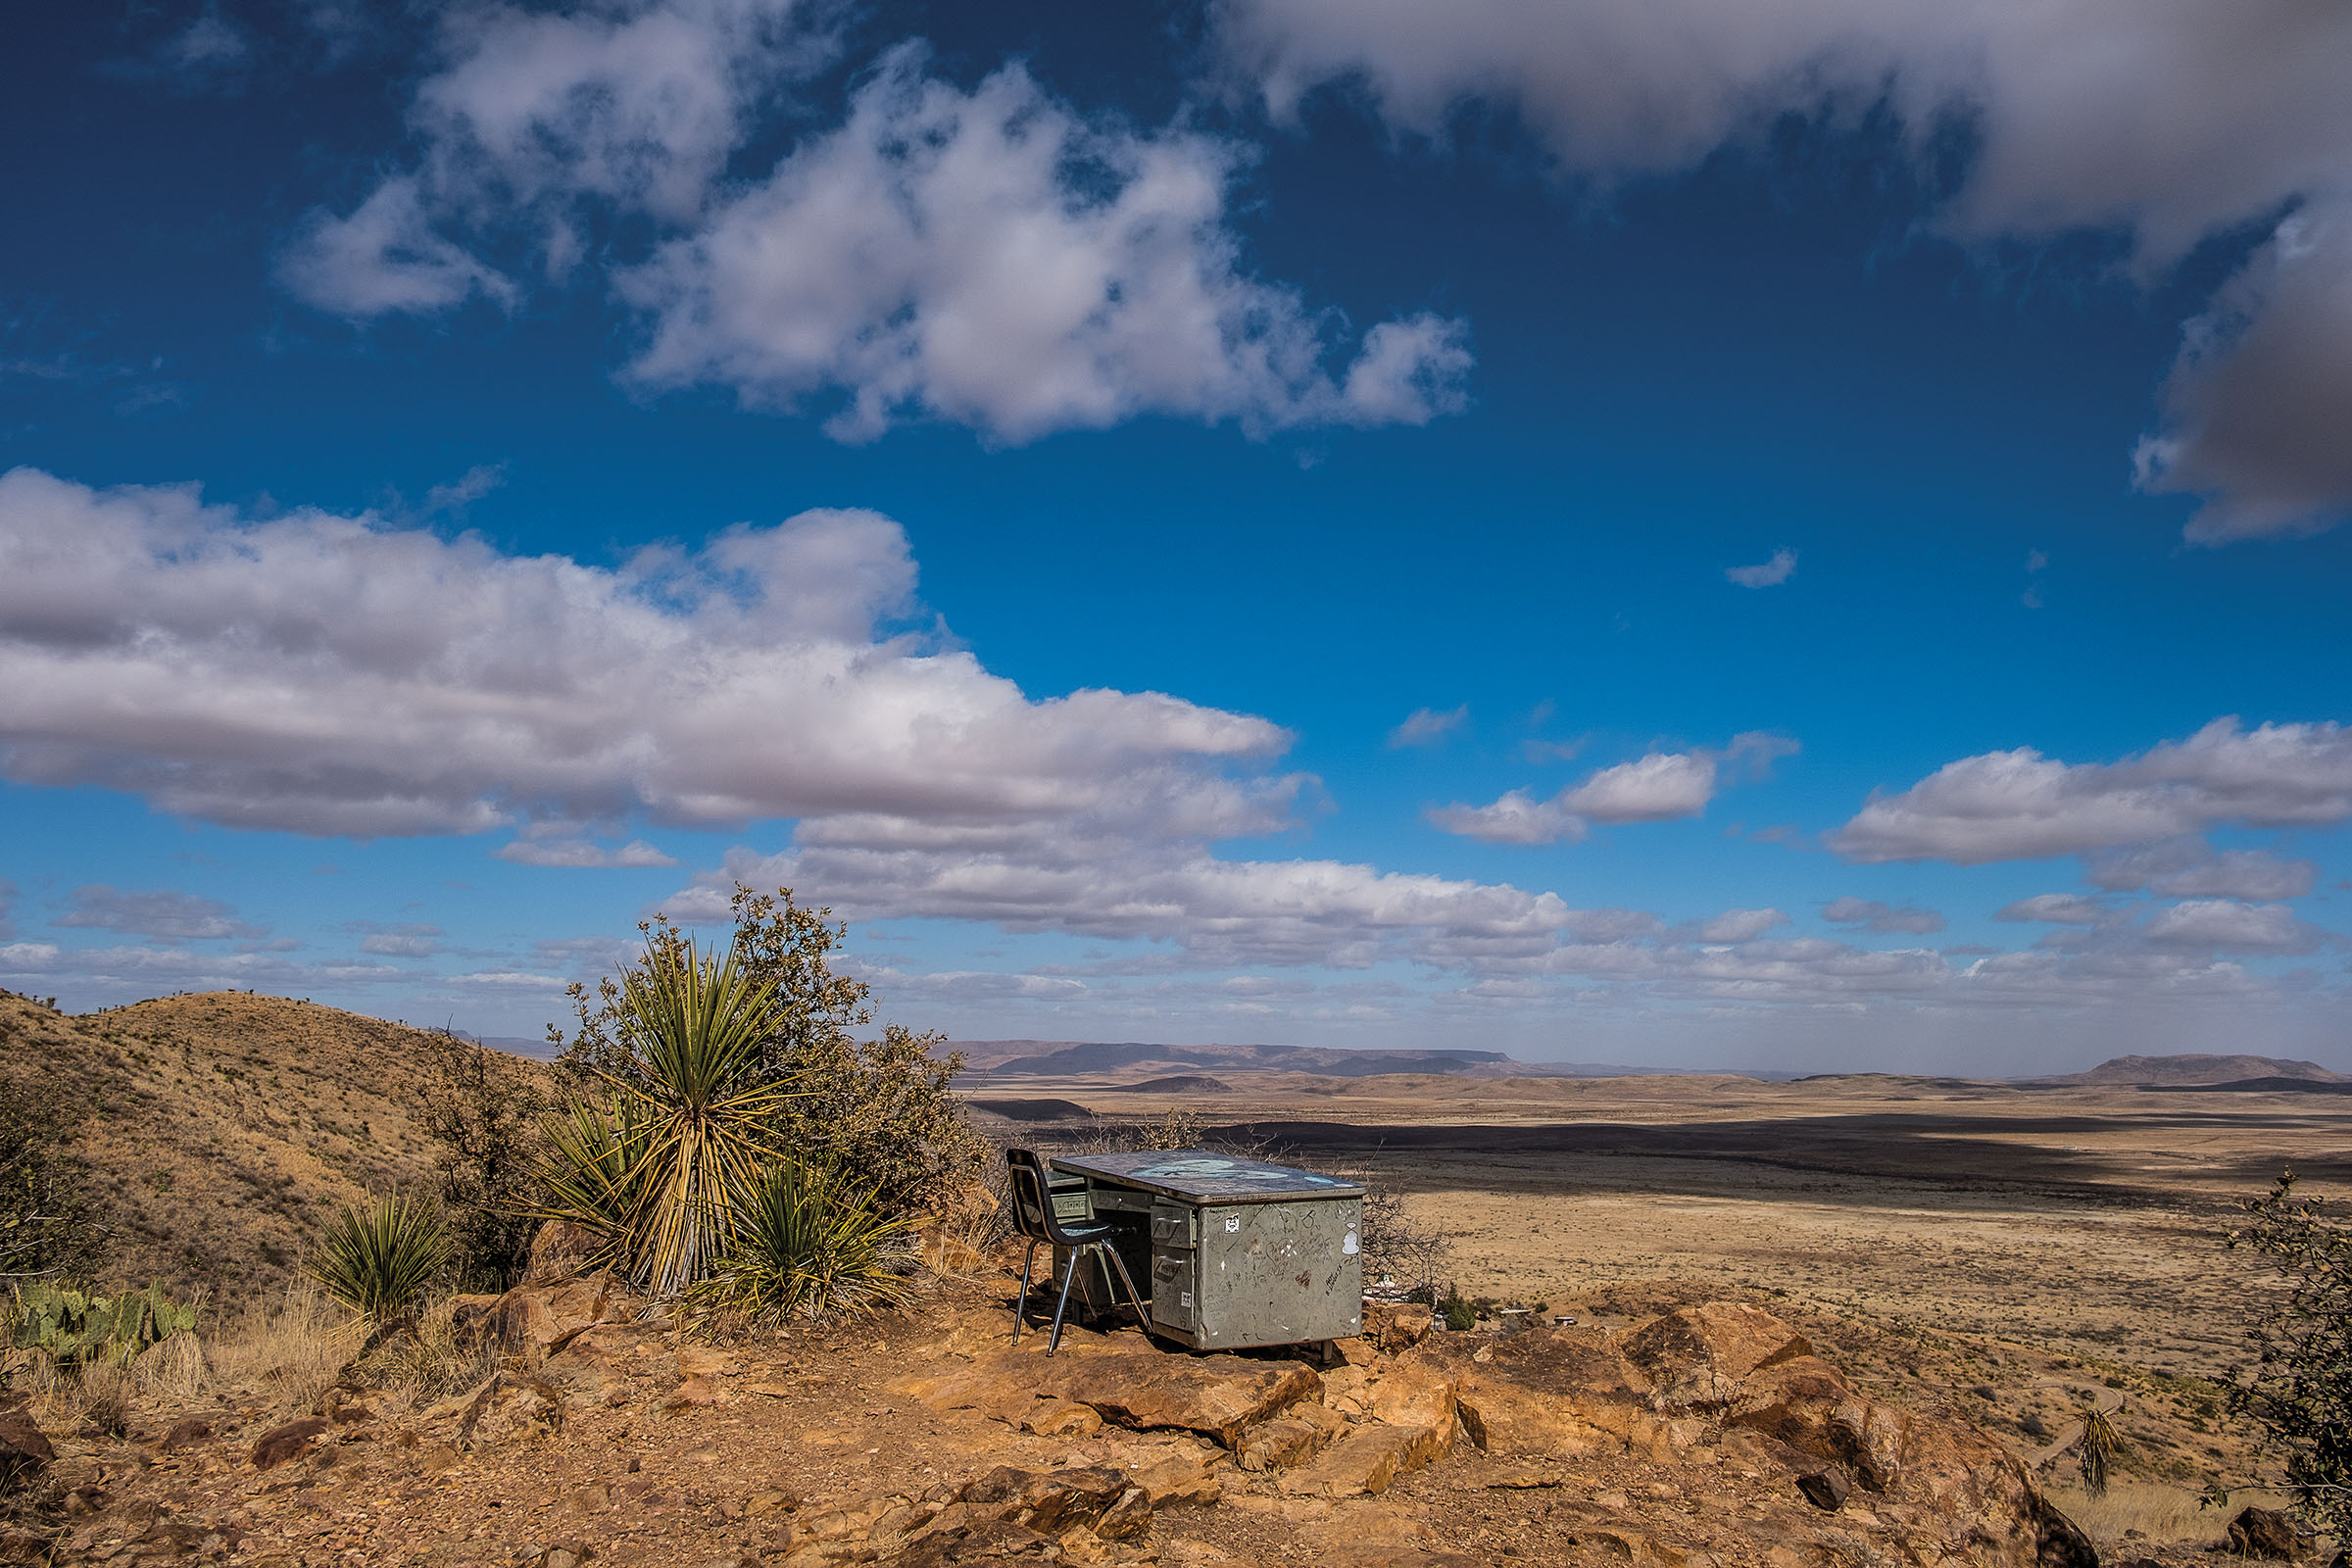 A school desk on top of a hill in a desert scene under blue sky